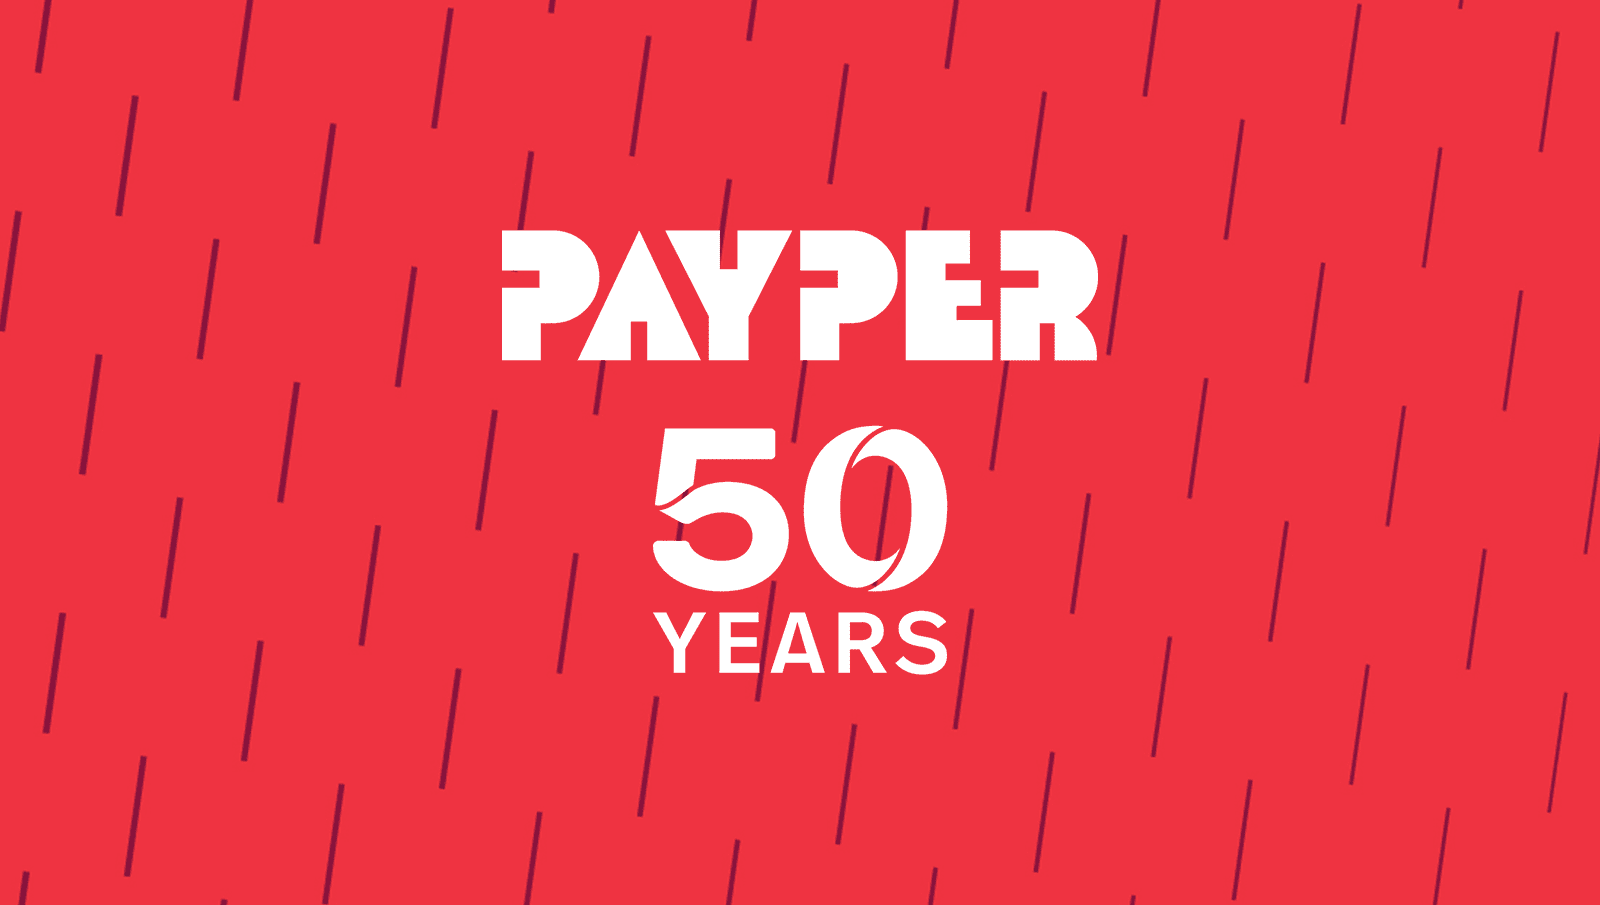 PAYPER celebrates its 50th anniversary